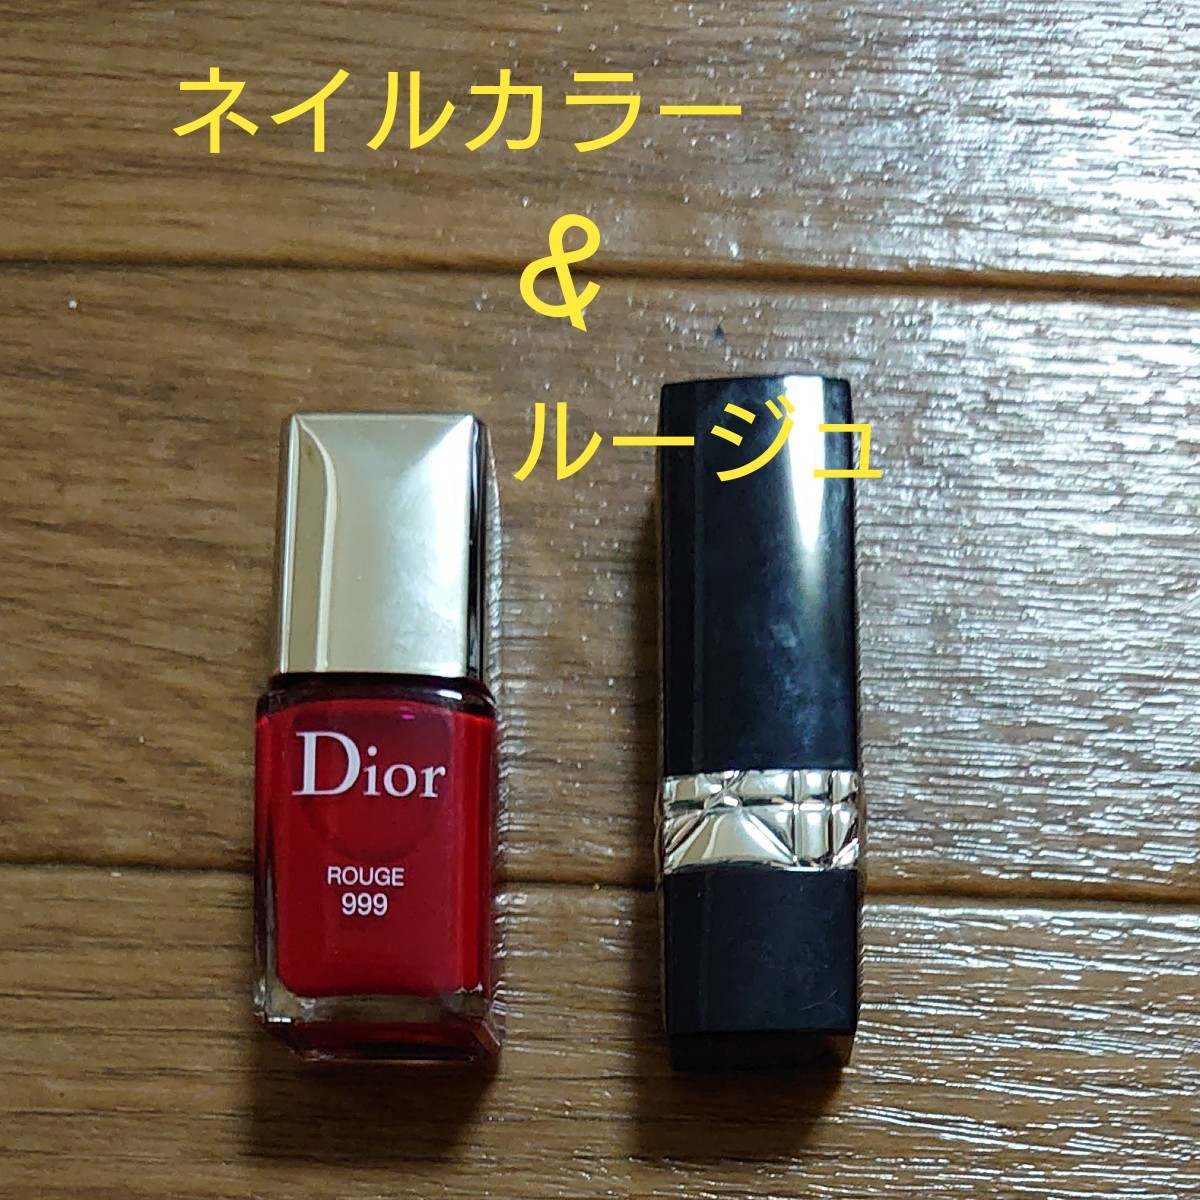 Dior ネイルカラー&ルージュ